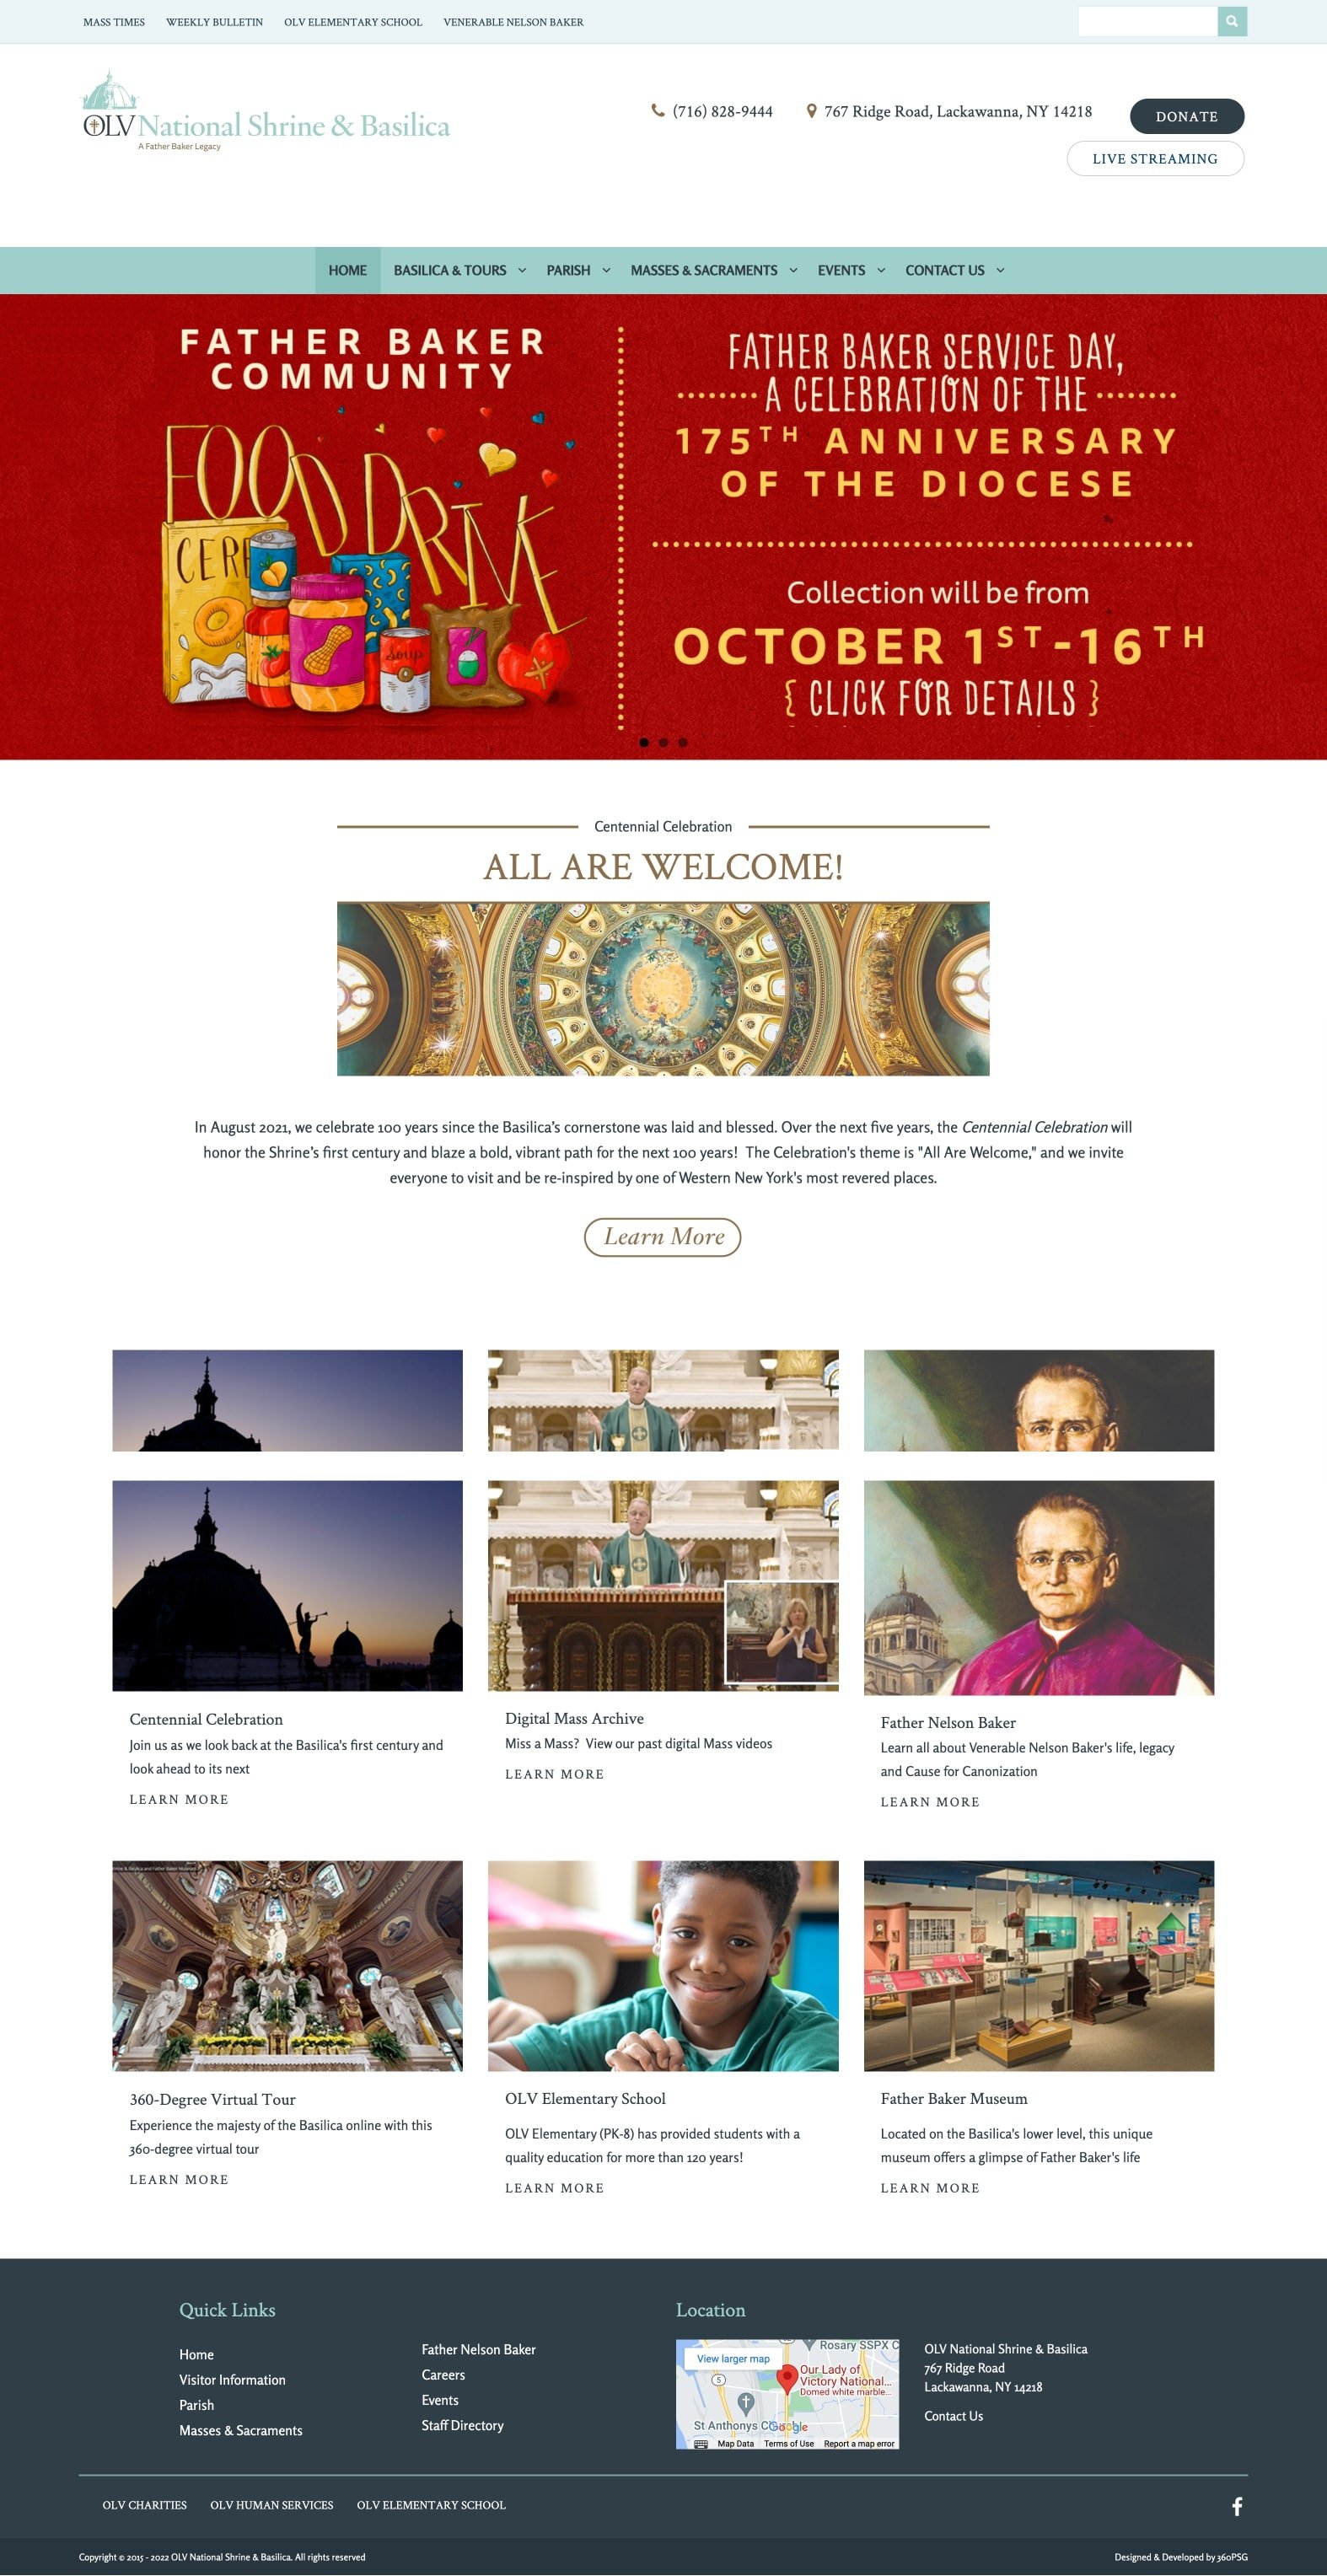 Our Lady of Victory National Shrine & Basilica Website - Desktop